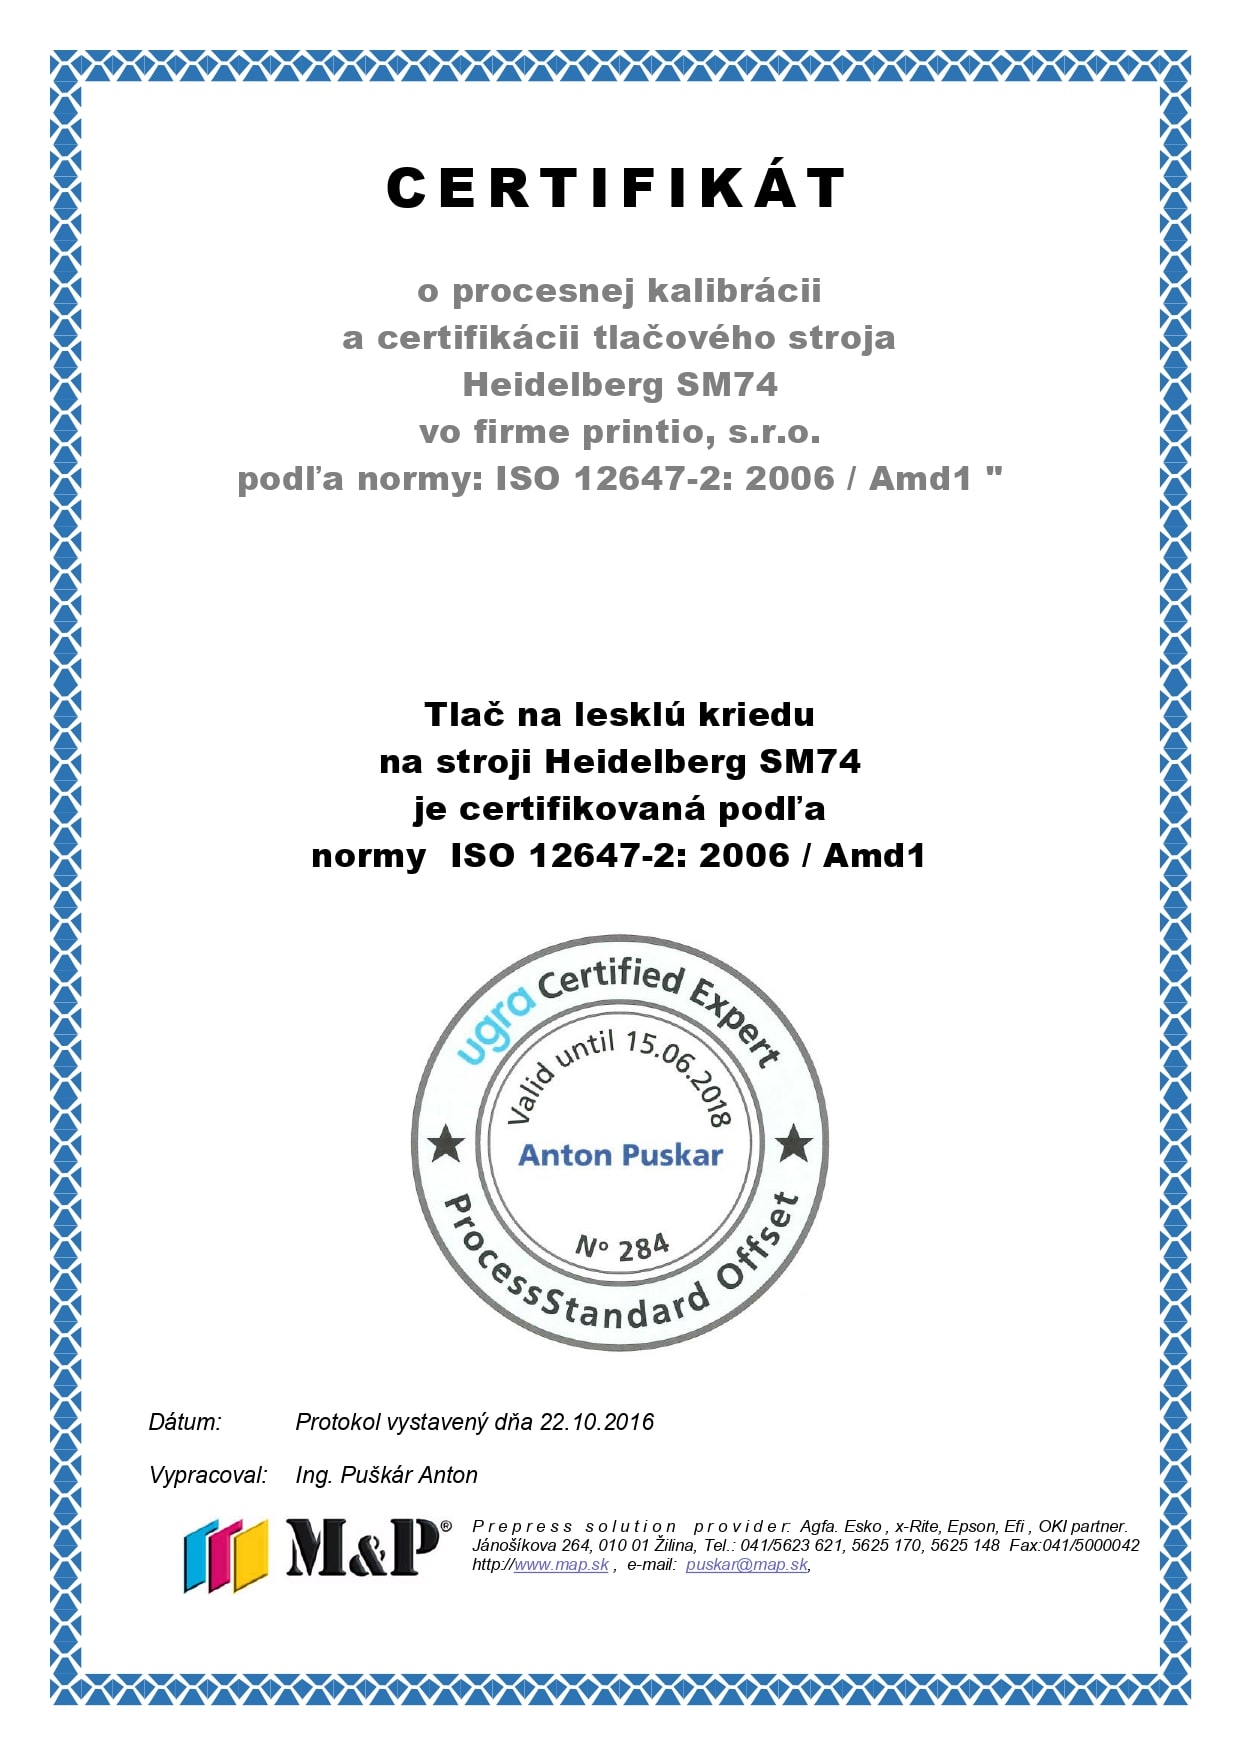 certifikat_proc.kalibracii_leskla_krieda_page